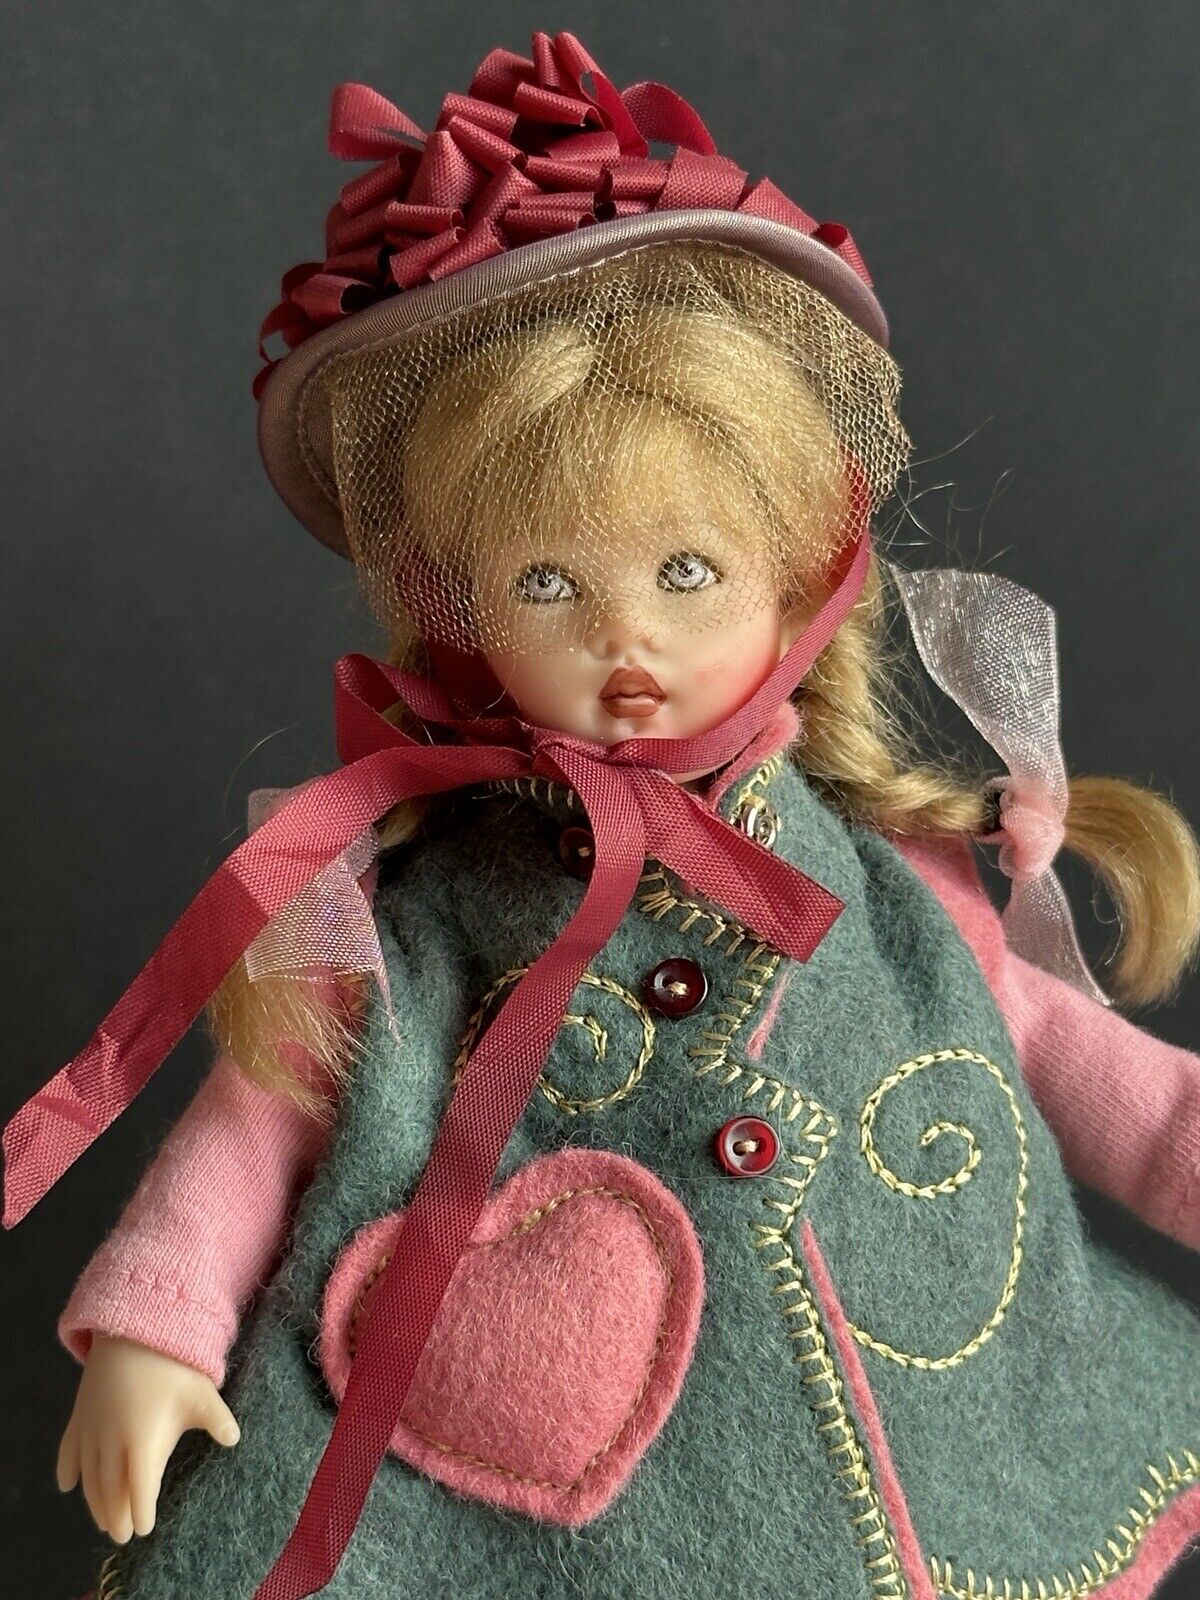 Collectible 7.5” Helen Kish Riley Vinyl Doll